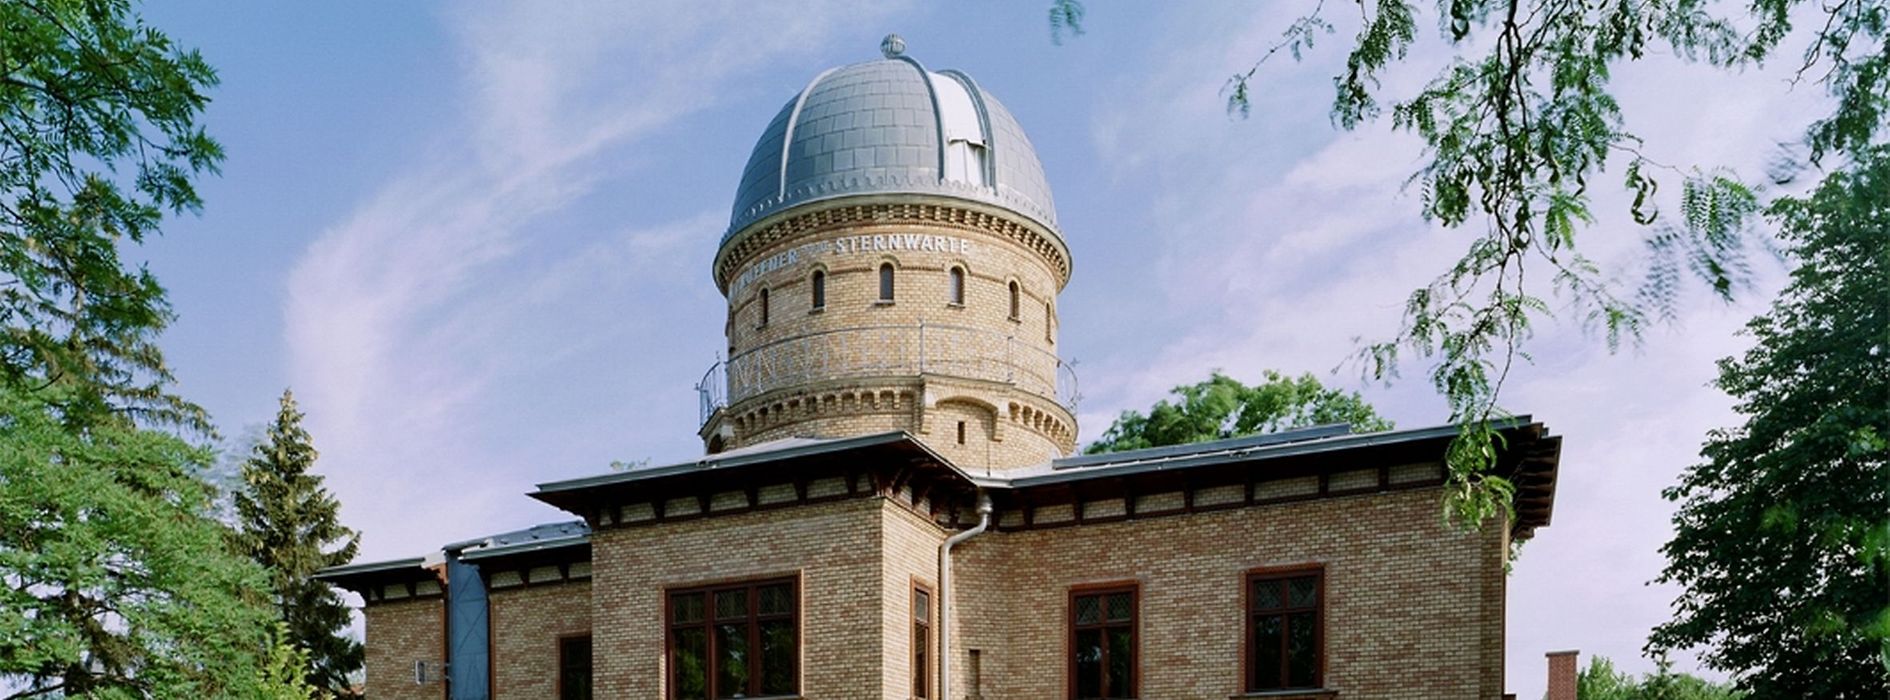 Observatoire de Kuffner